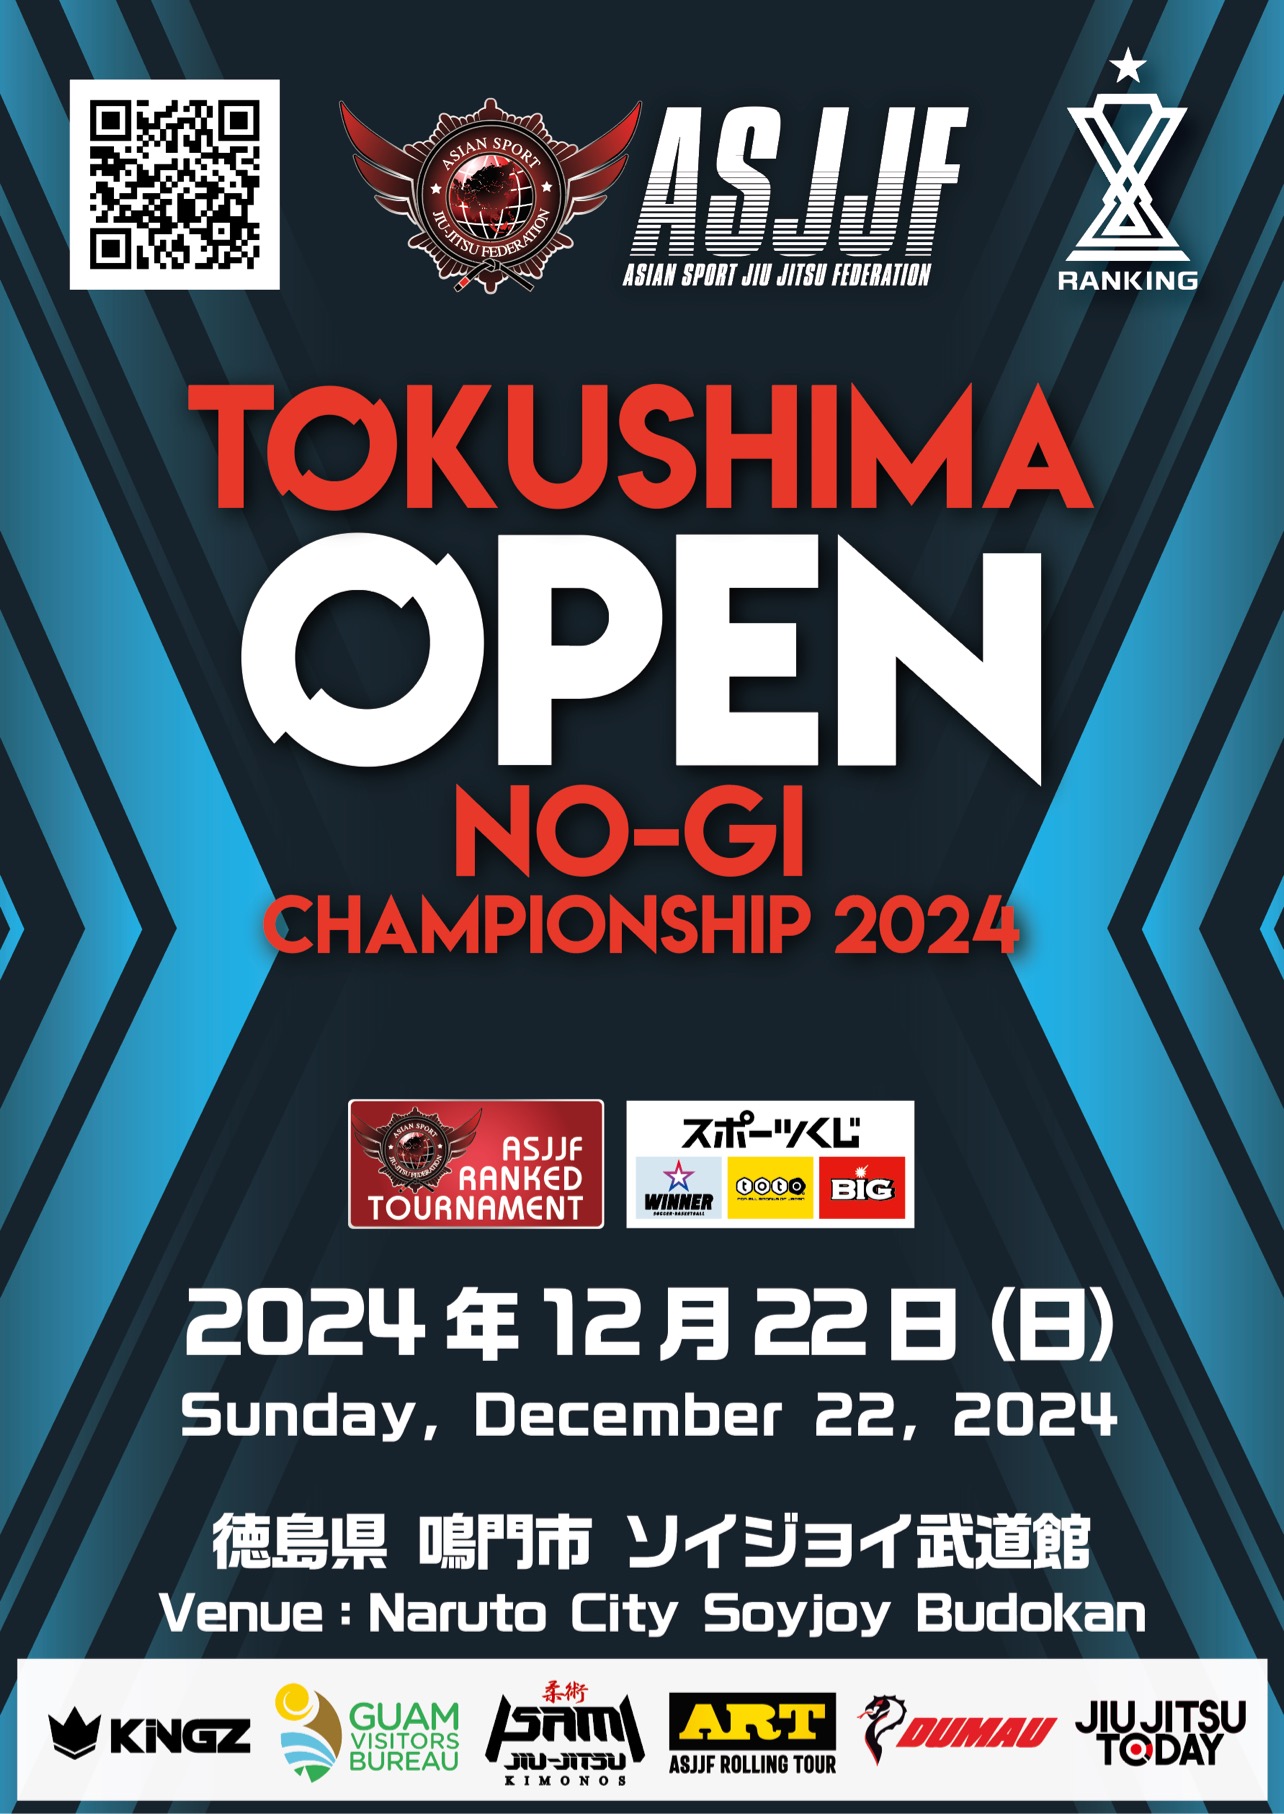 tokushima open no-gi championship 2024